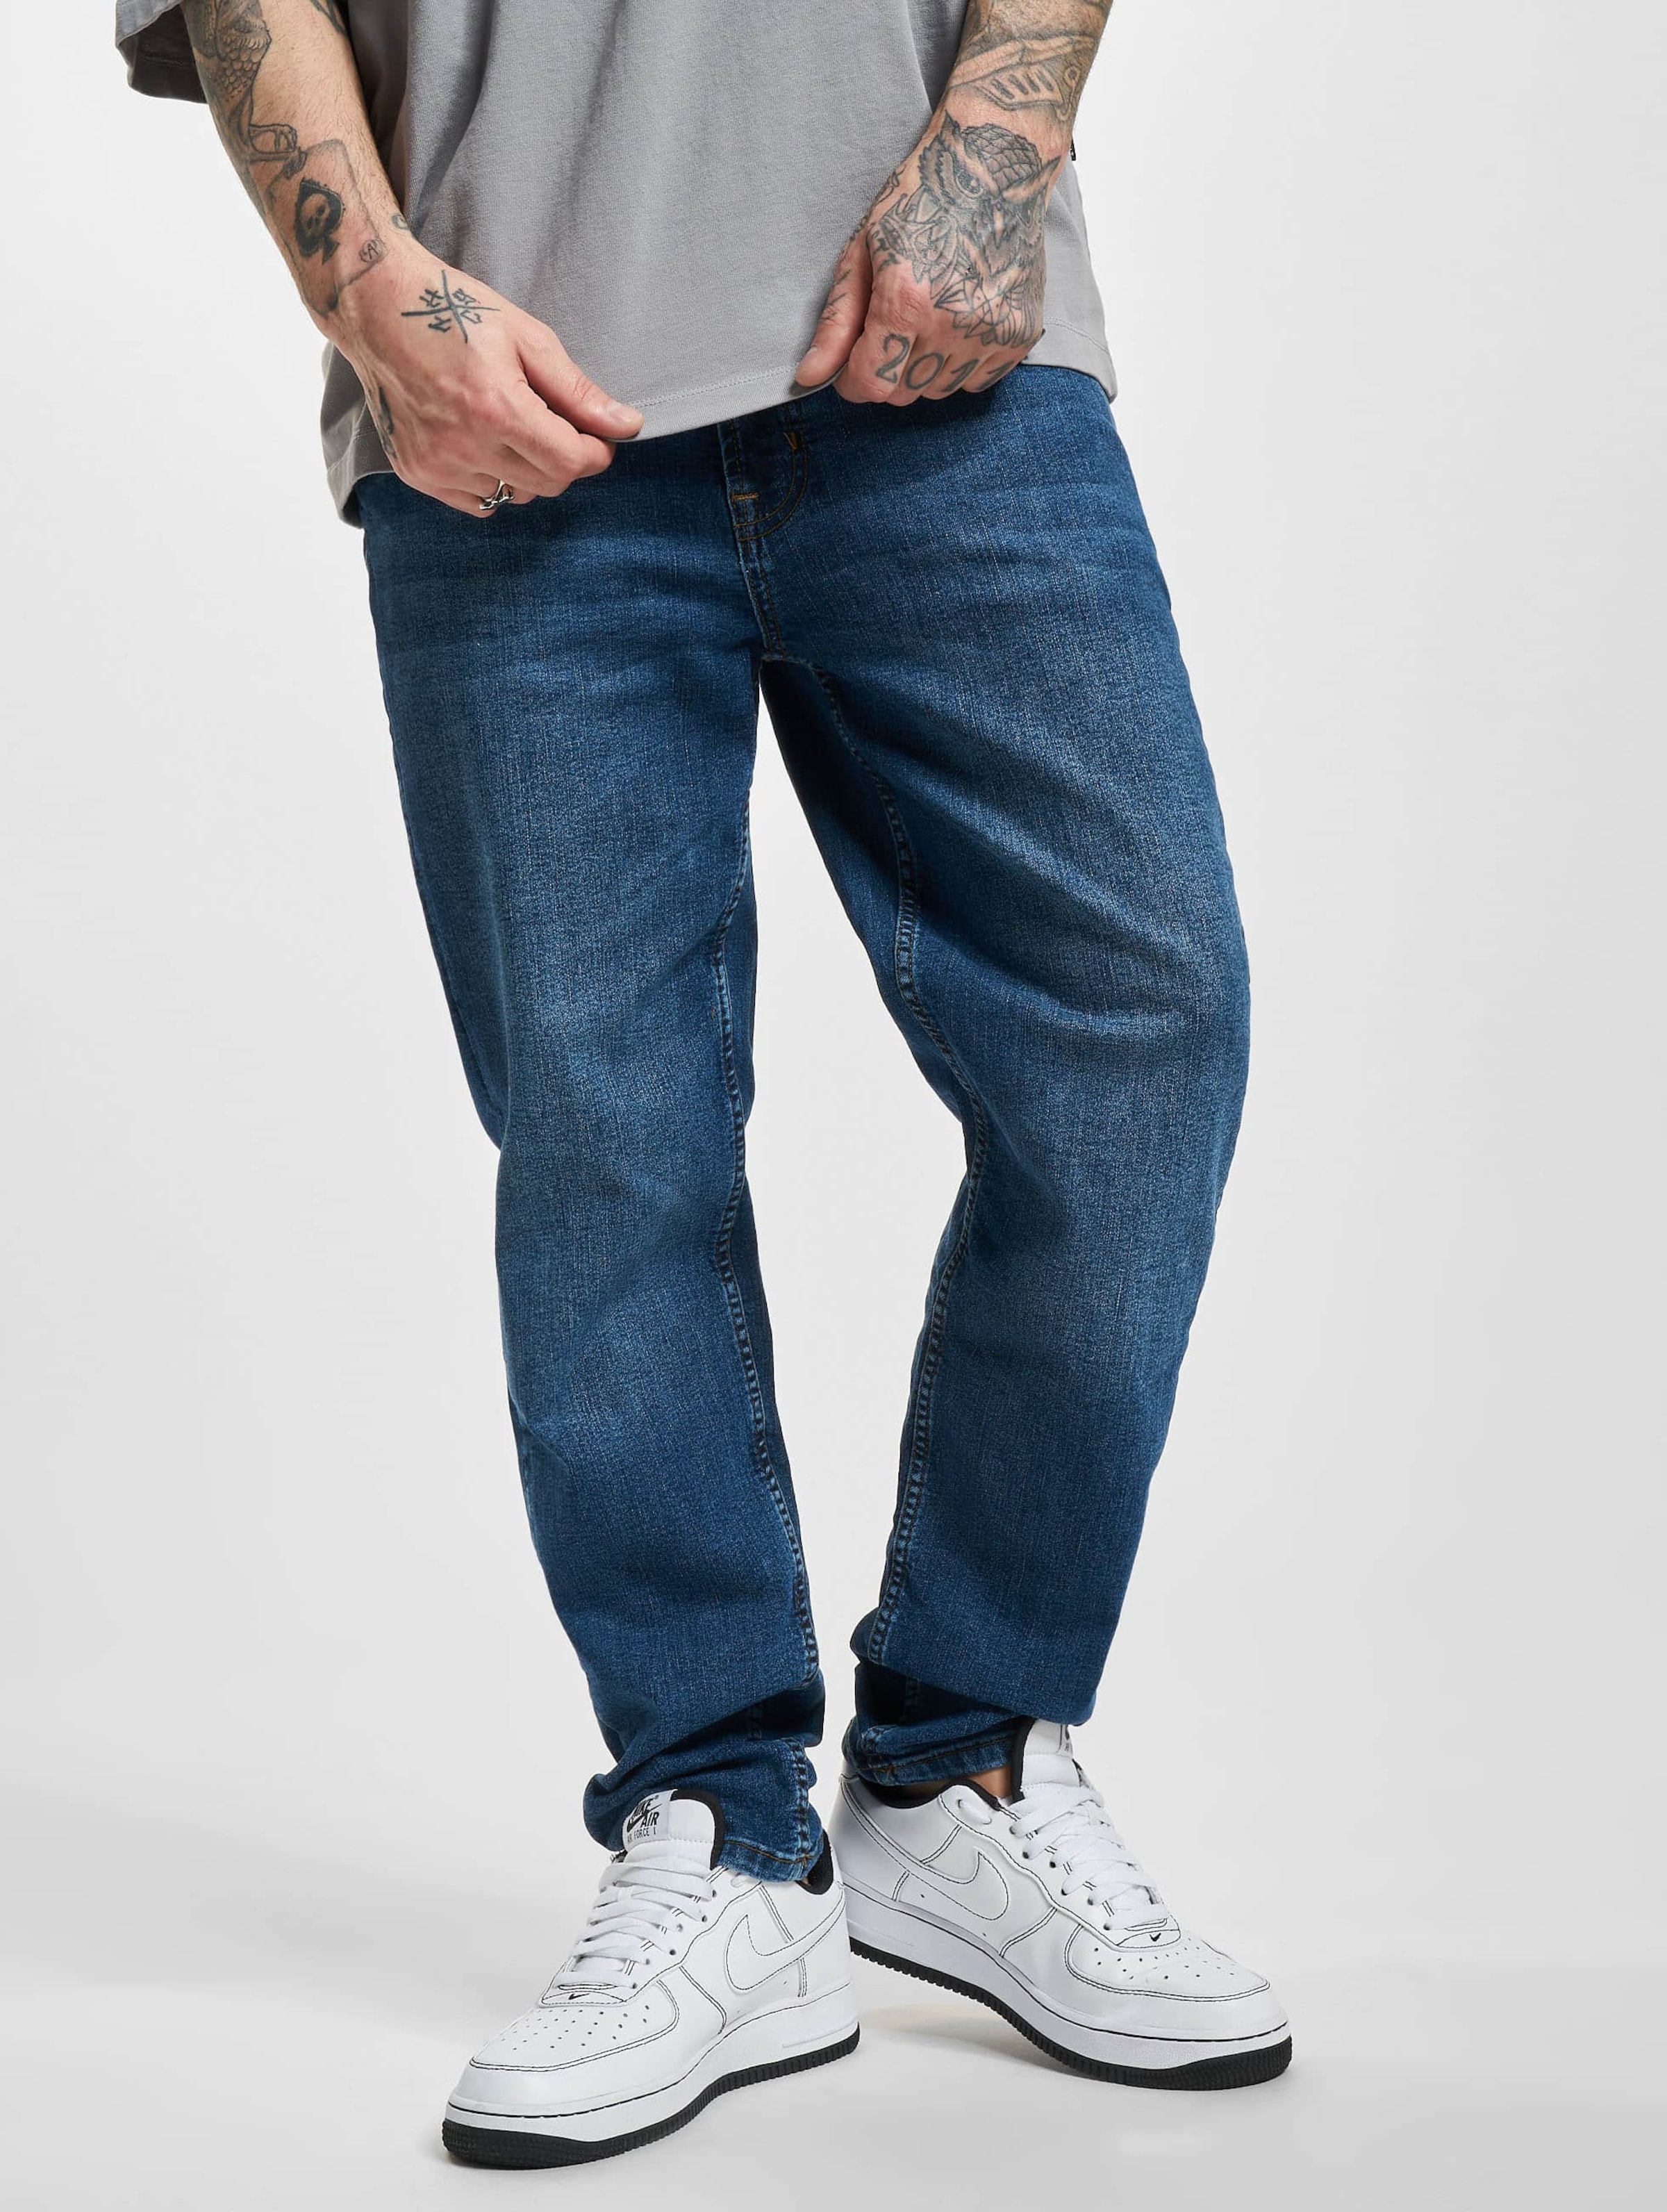 Denim Project Dprecycled Carrot Fit Jeans Mannen op kleur blauw, Maat 3130